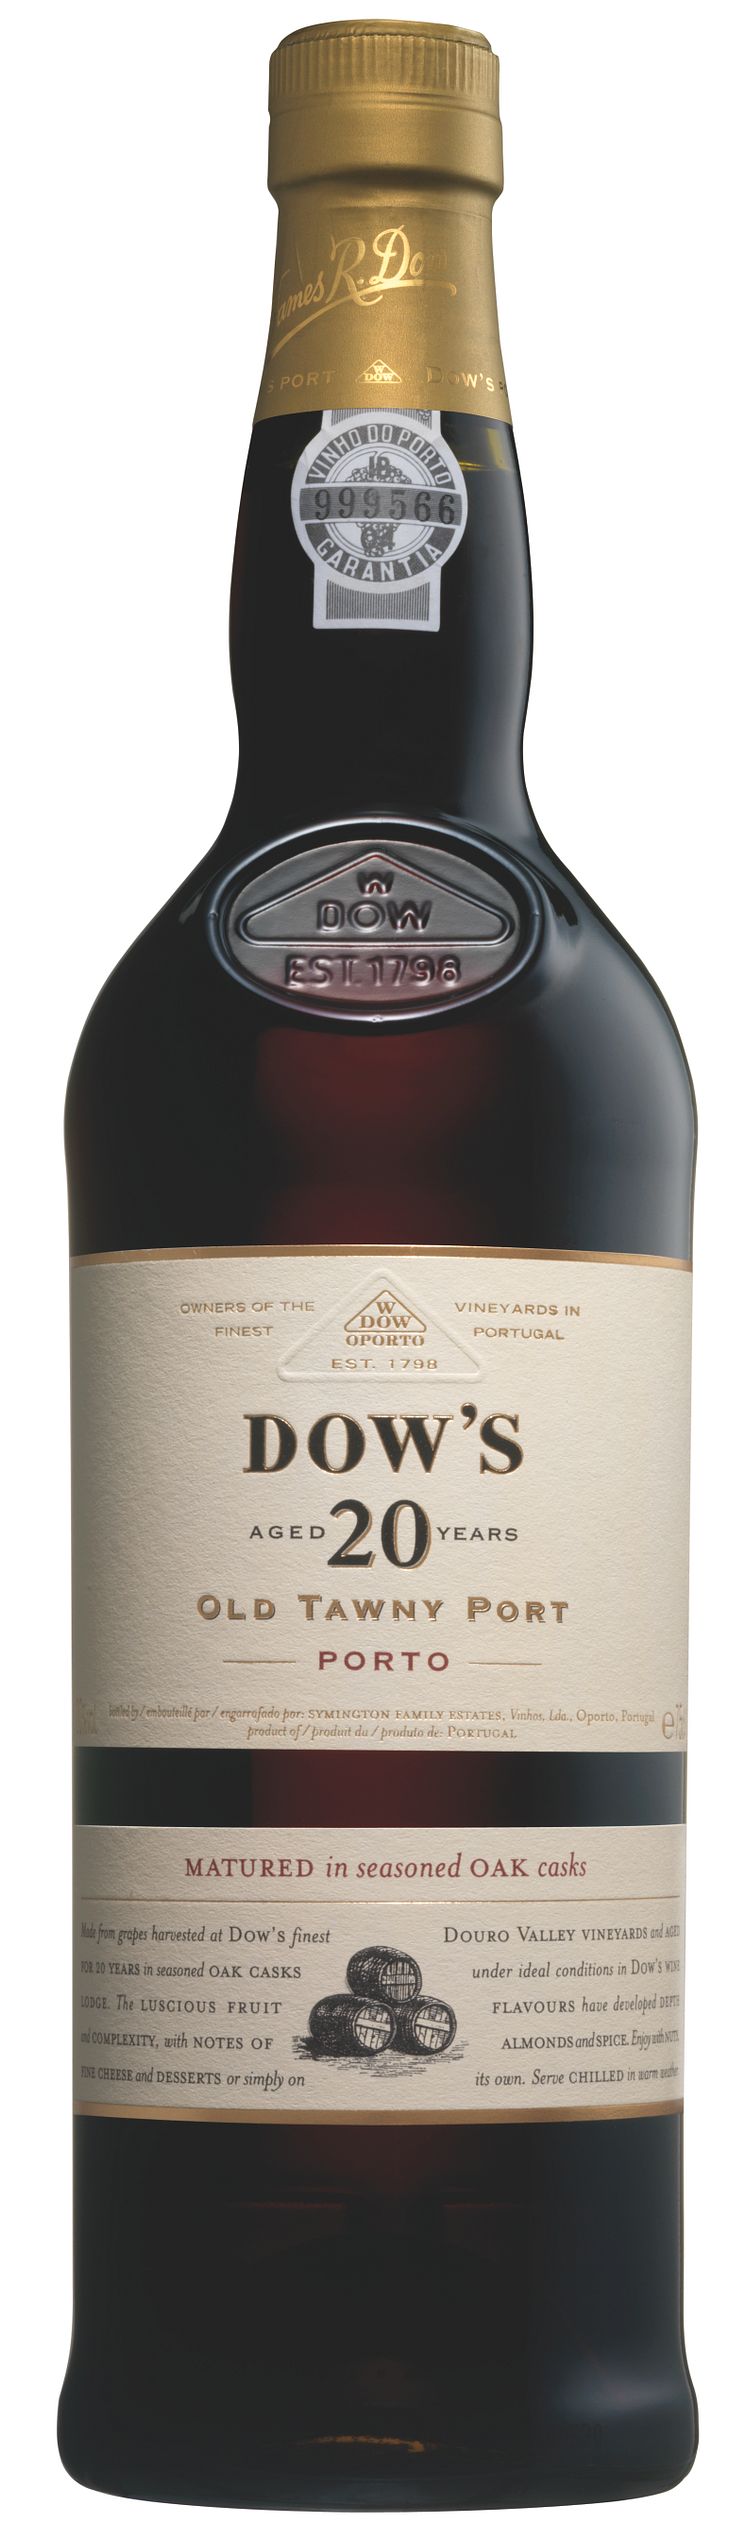 Dow’s 20 YO Tawny Port, 449 kr (Lanserades 4/11), Art nr: 90111